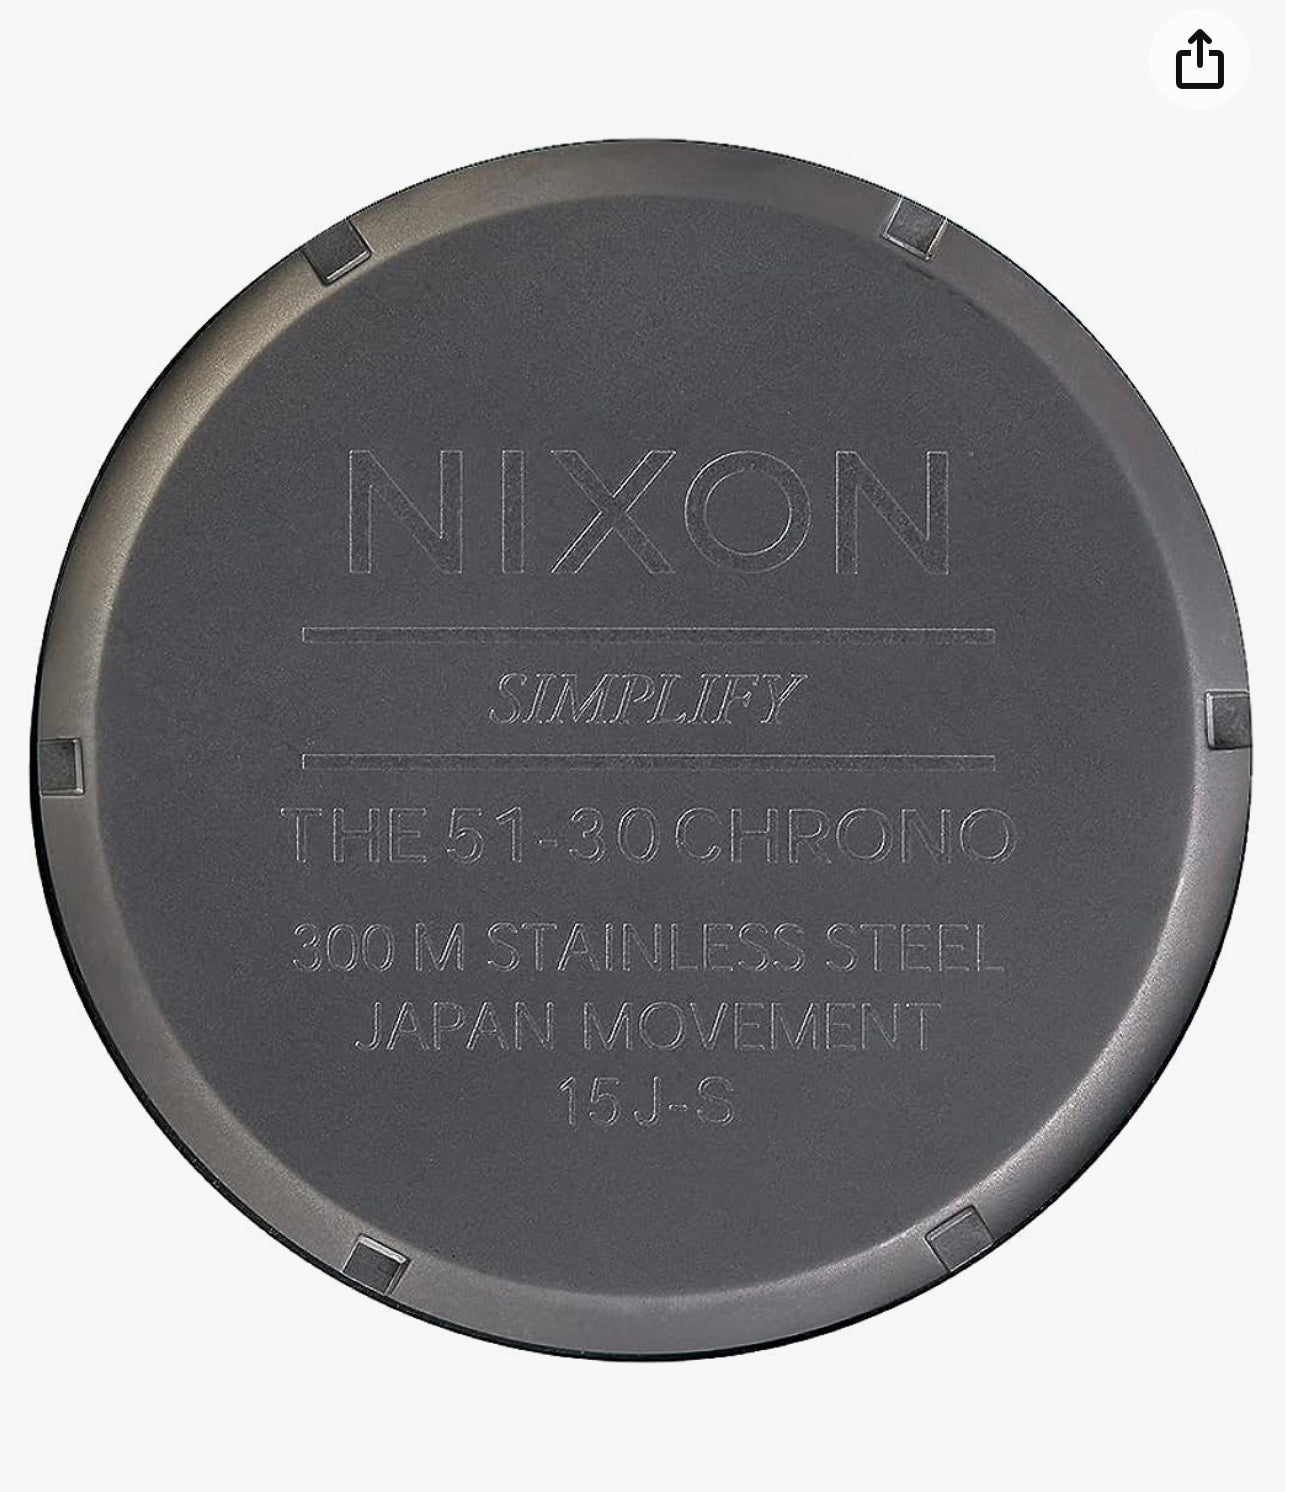 Nixon 51-30 Chrono. BLACK / WHITE / GUNMETAL. 100m Water Resistant Men’s Watch (XL 51mm Watch Face/ 25mm Stainless Steel Band